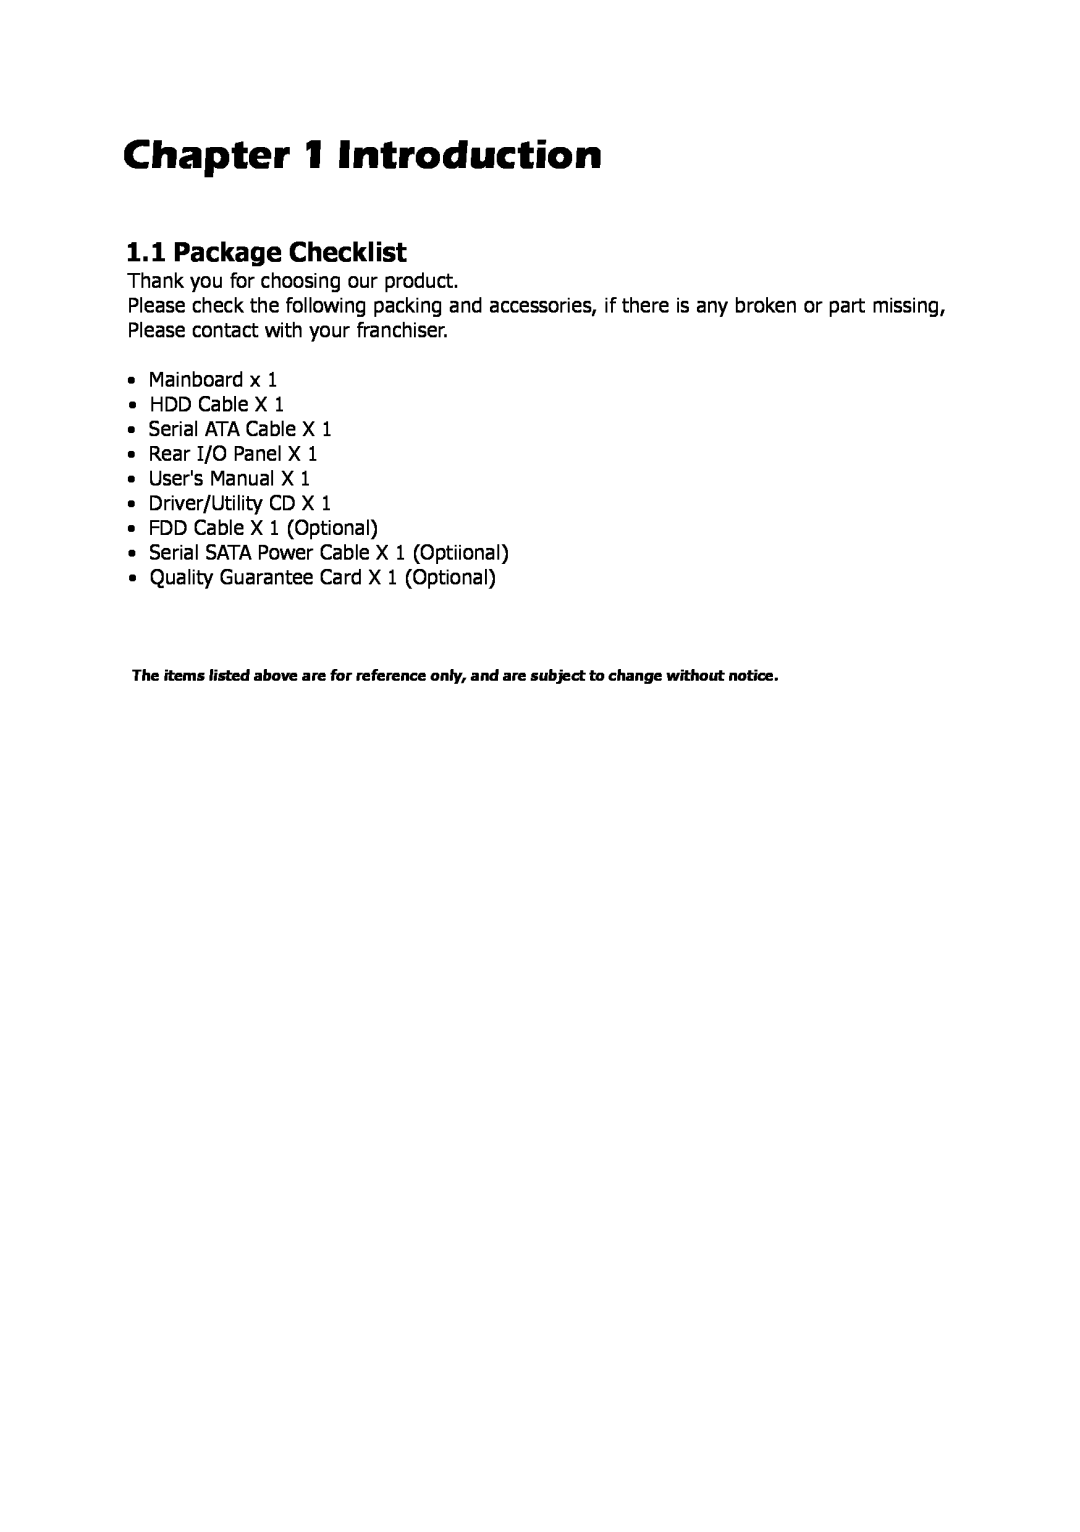 Intel 88ENEP3S00, Intel P35/P31 Socket LGA775 Processor Mainboard user manual Introduction, Package Checklist 